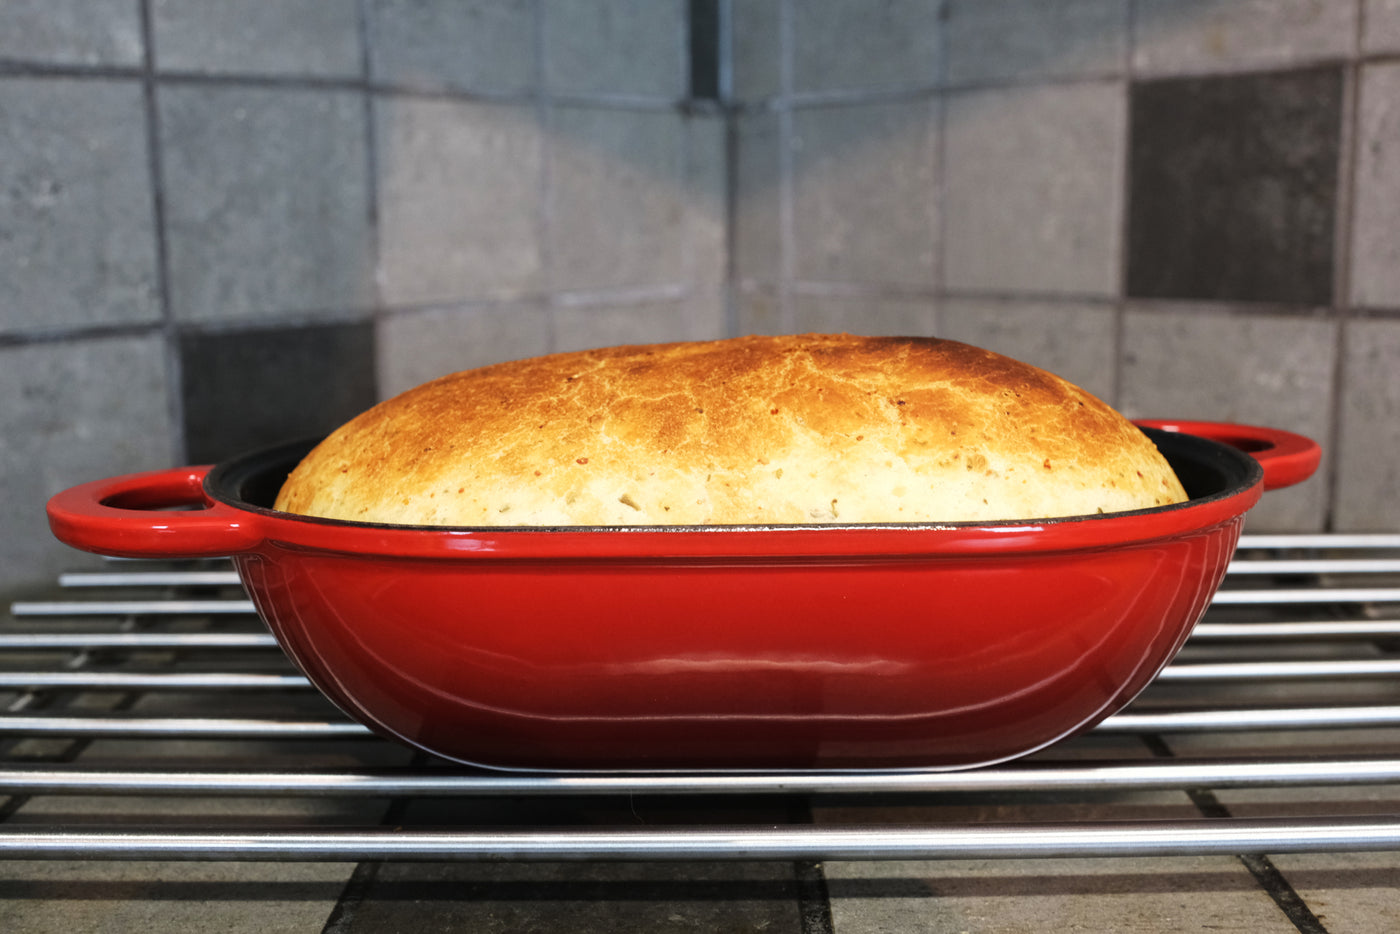 Emaljert støpejernsbrødform med lokk, rød, ovnssikker form for baking, håndverksbrødsett - brødform